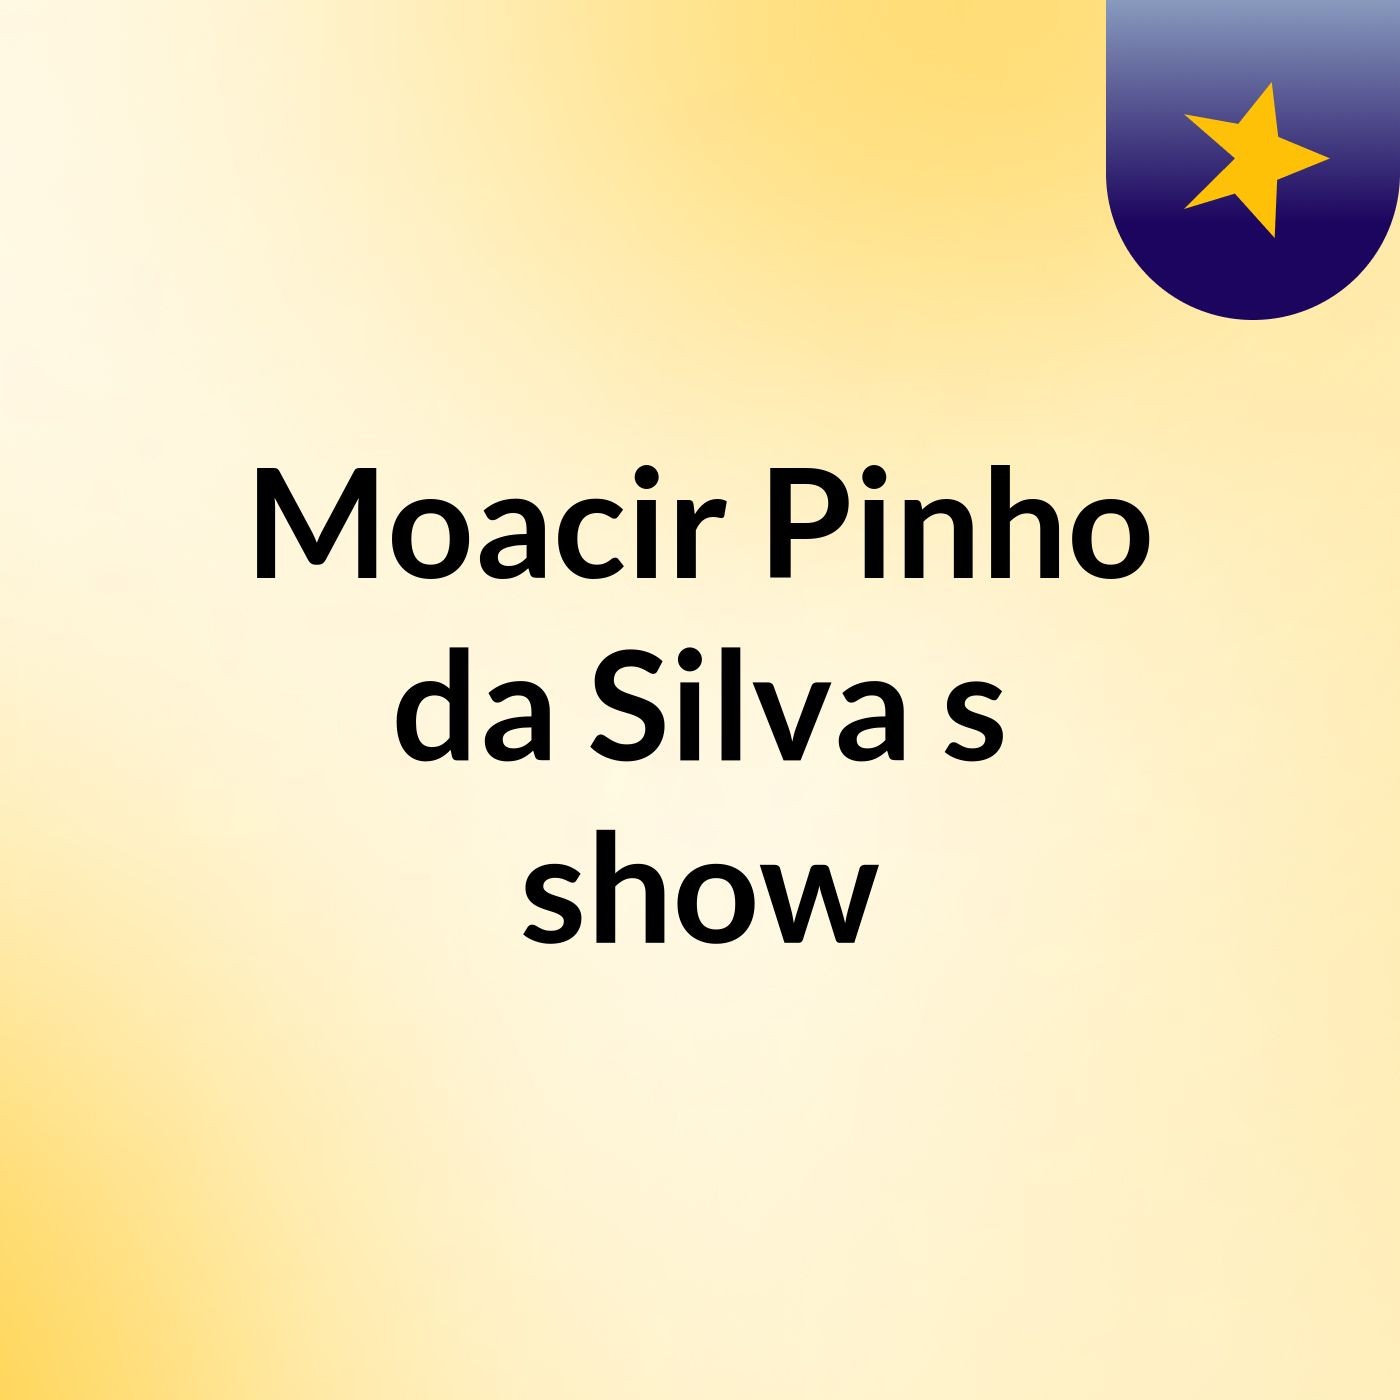 Moacir Pinho da Silva's show